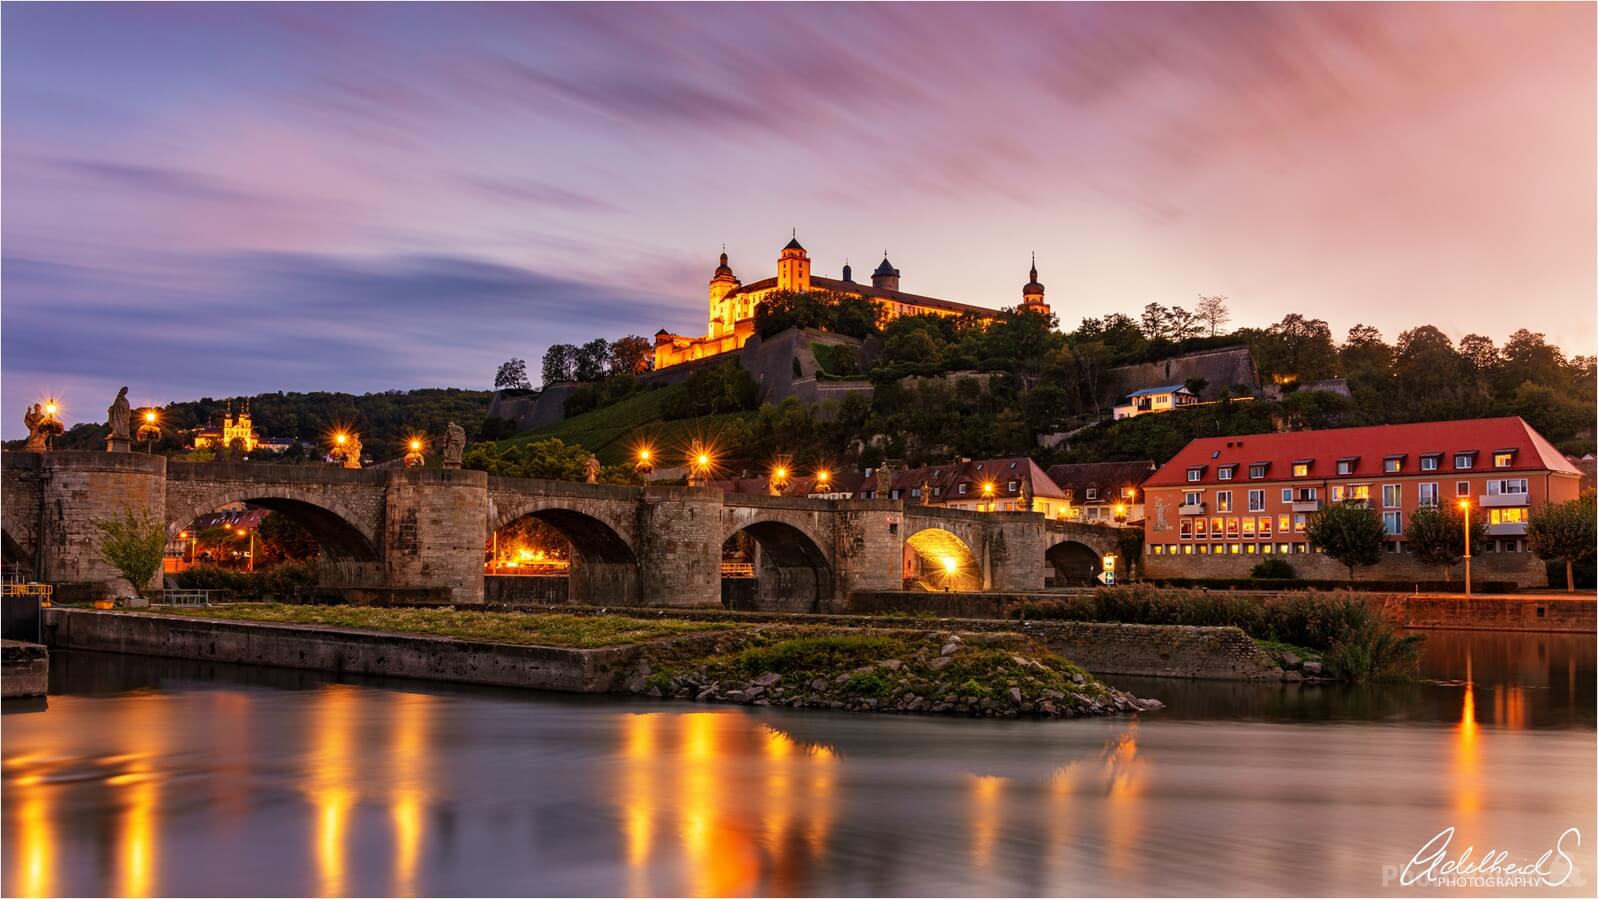 Image of Marienberg Fortress and Old Main Bridge, Würzburg by Adelheid Smitt